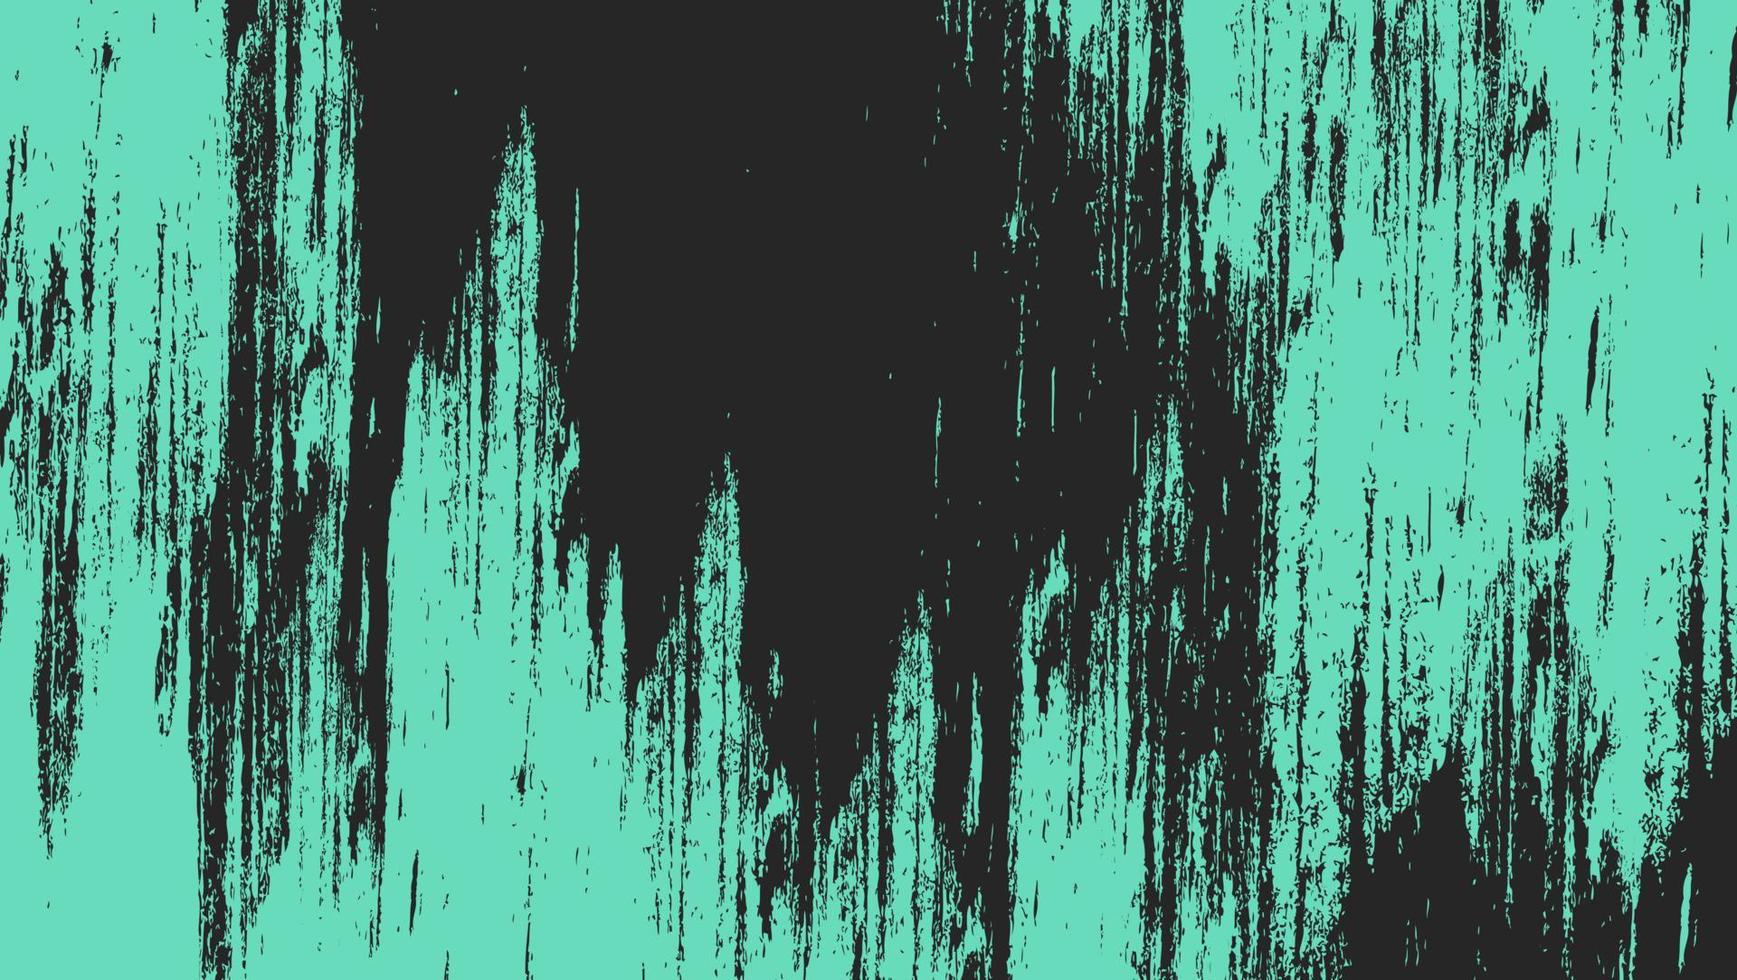 abstrakt blå cyan grunge textur design i svart bakgrund vektor